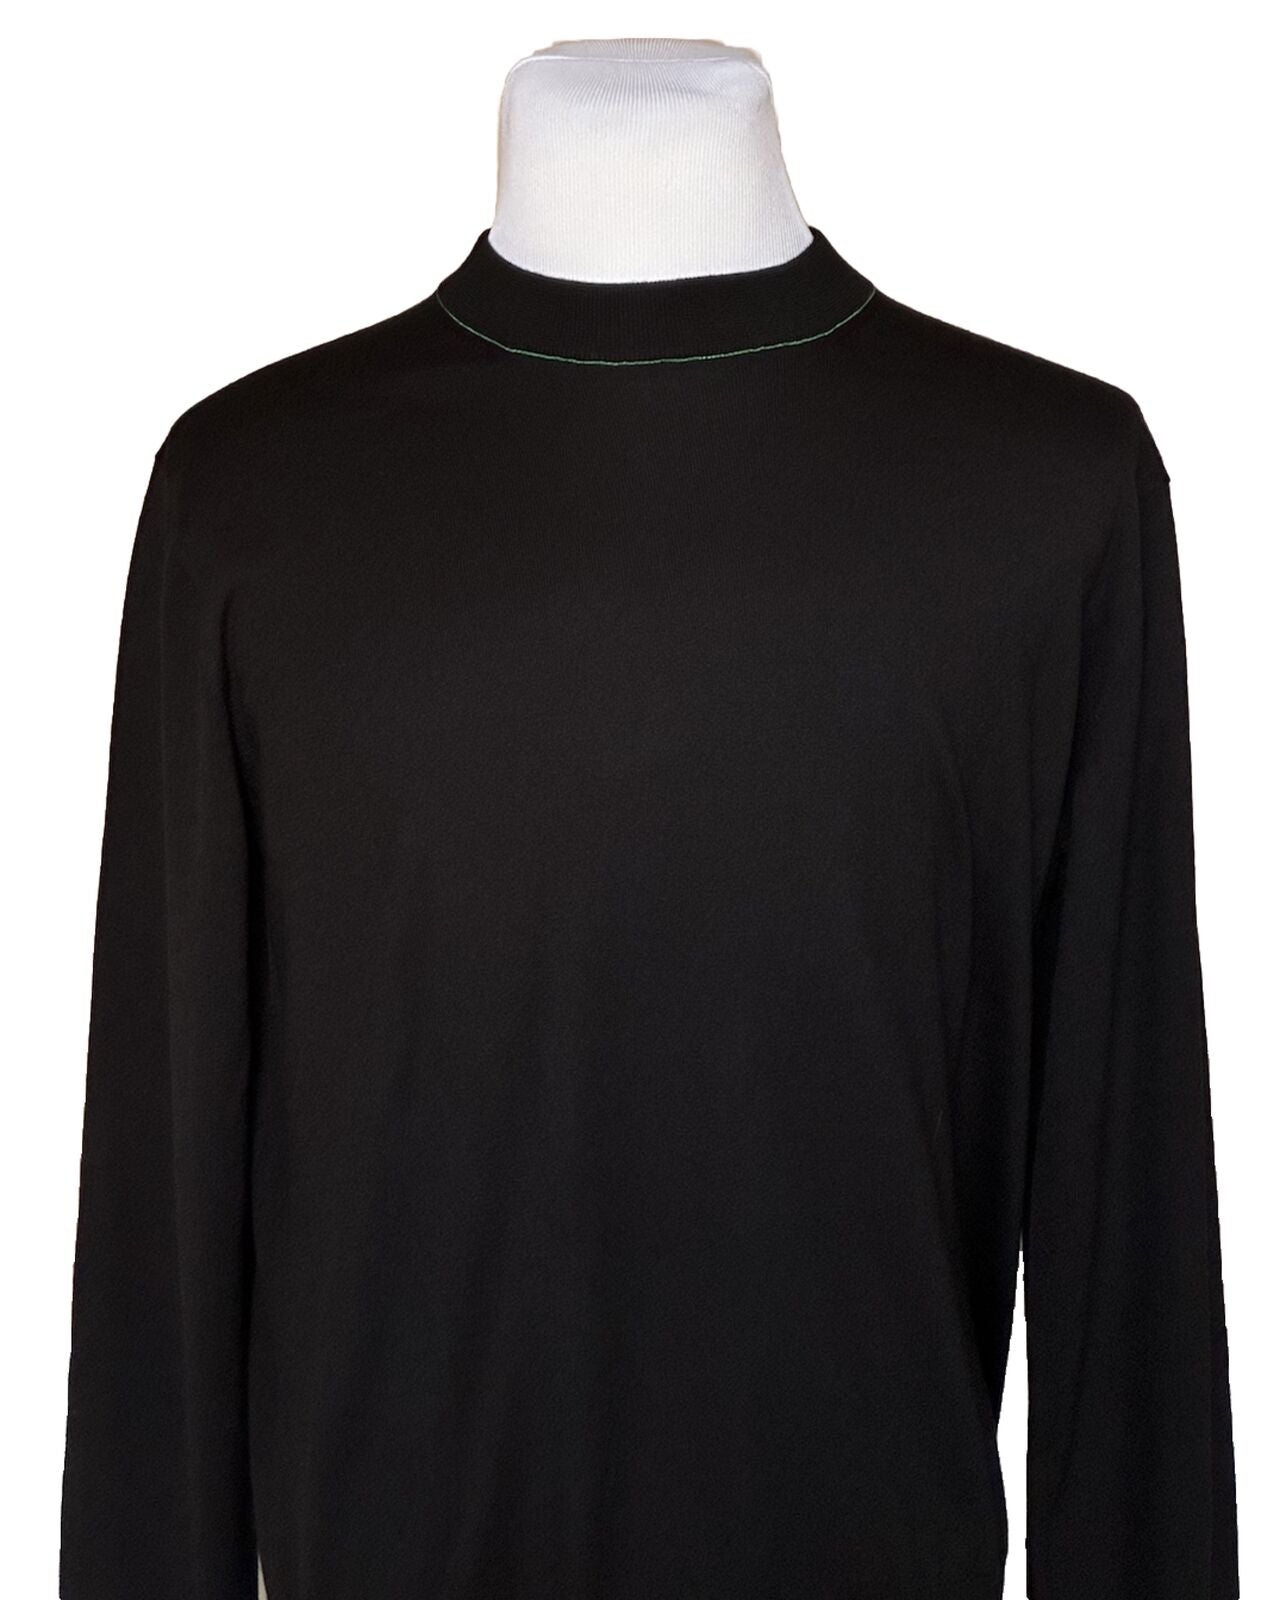 NWT $1050 Bottega Veneta Merino Wool Knit Pullover Sweater Large Black 704880 IT